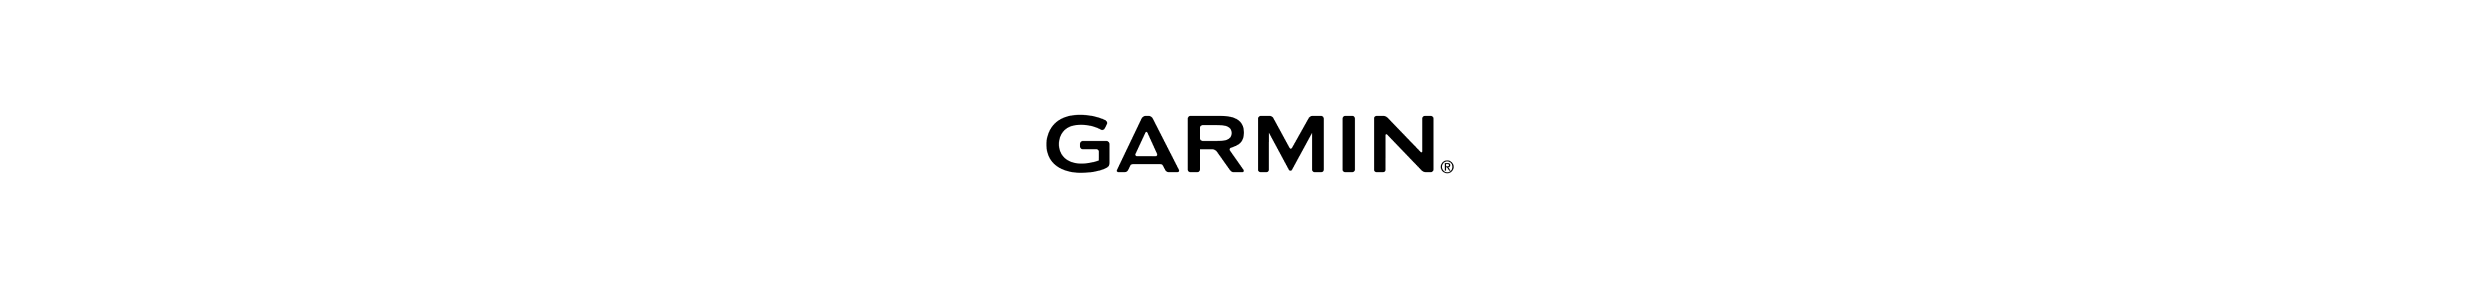 GARMIN logo